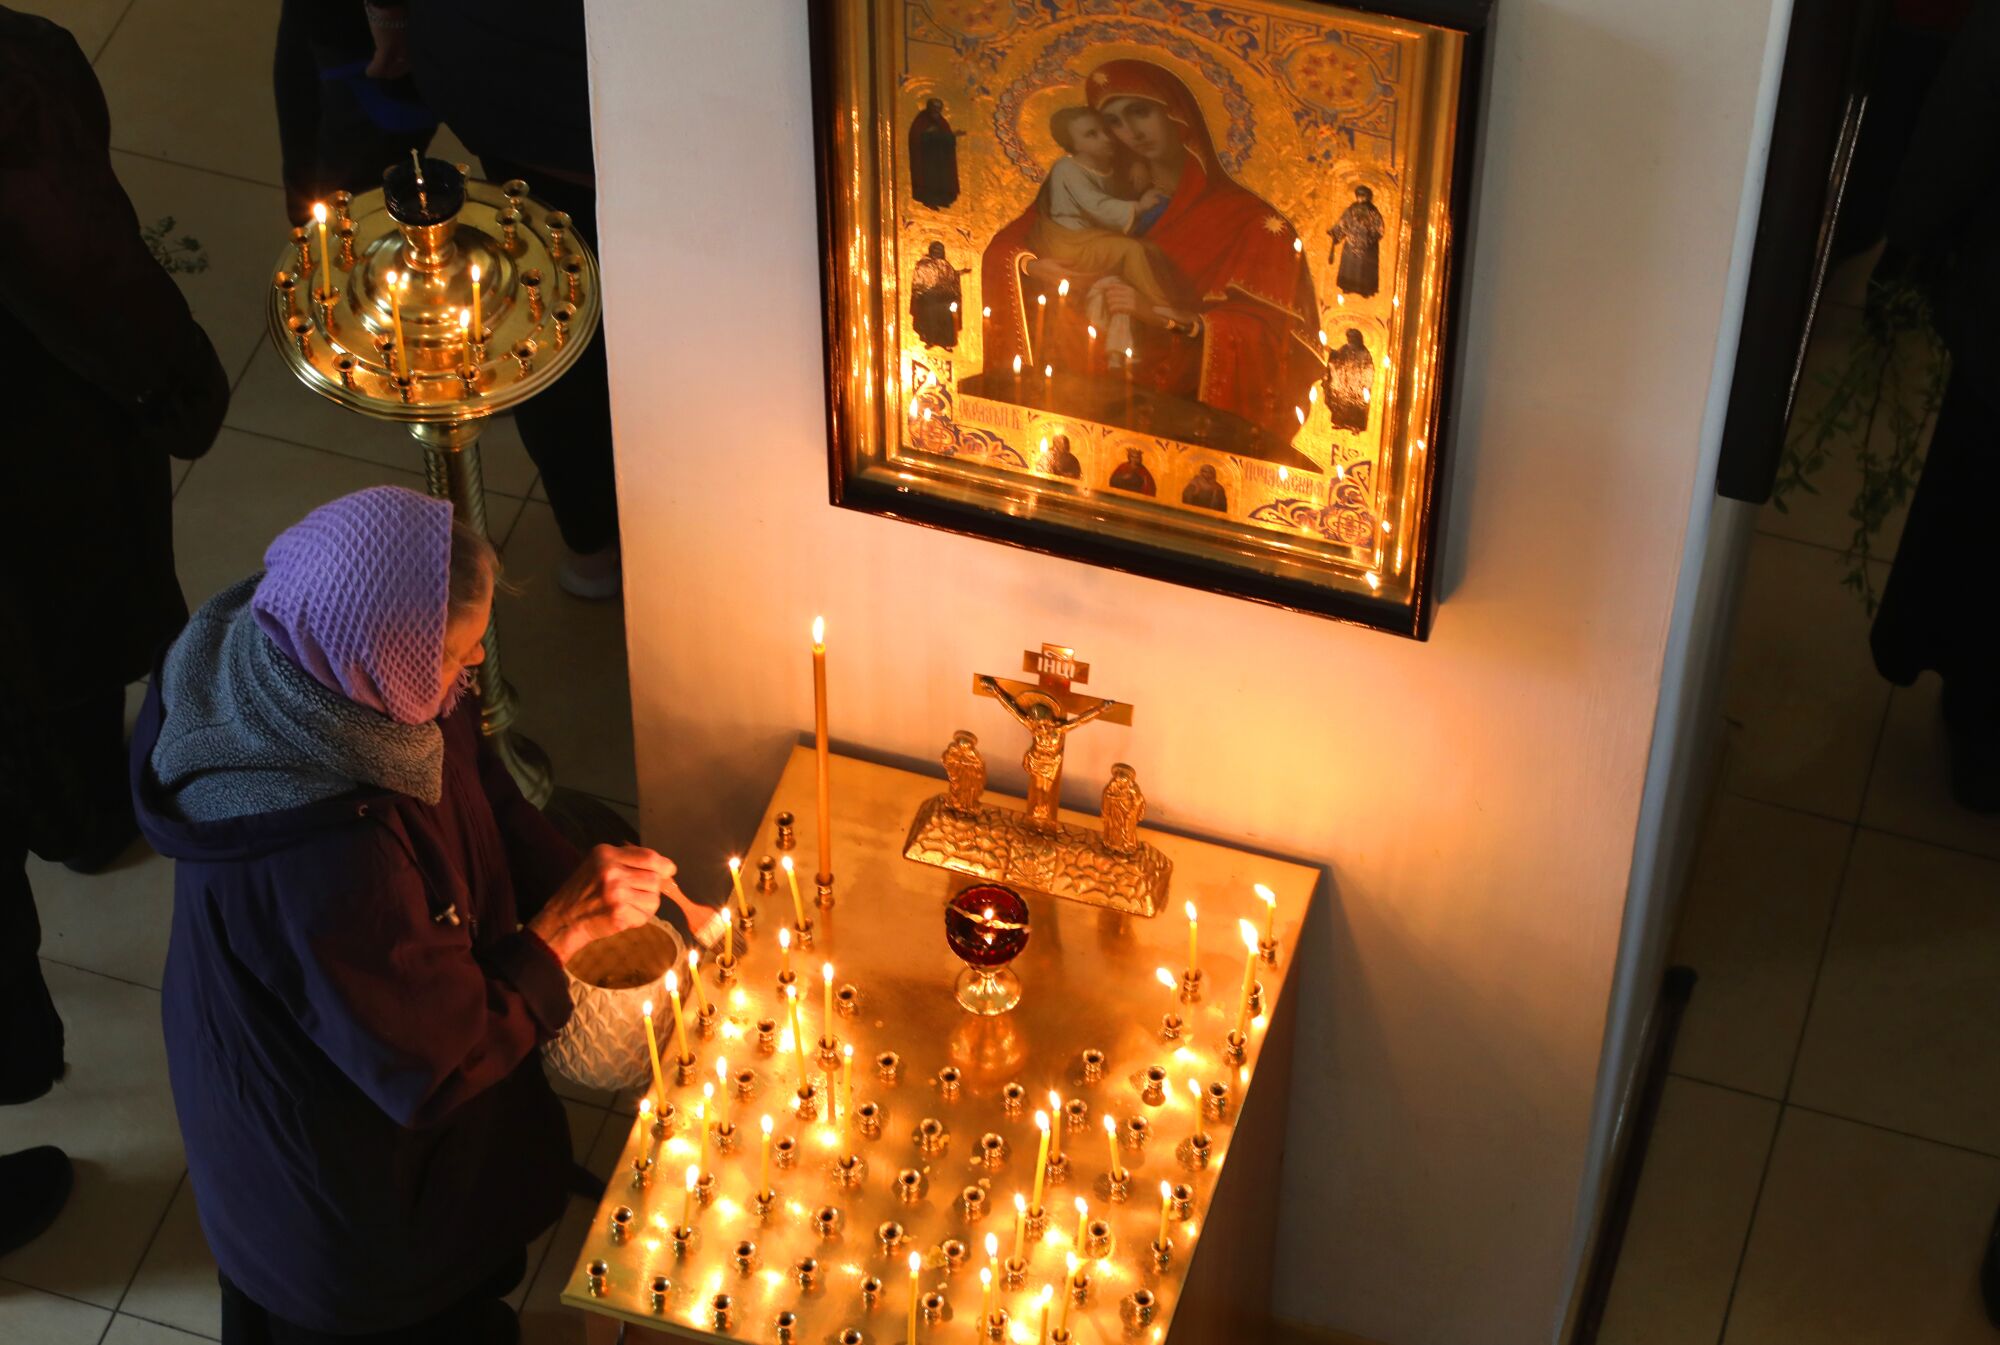 A woman lights a candle inside a church.